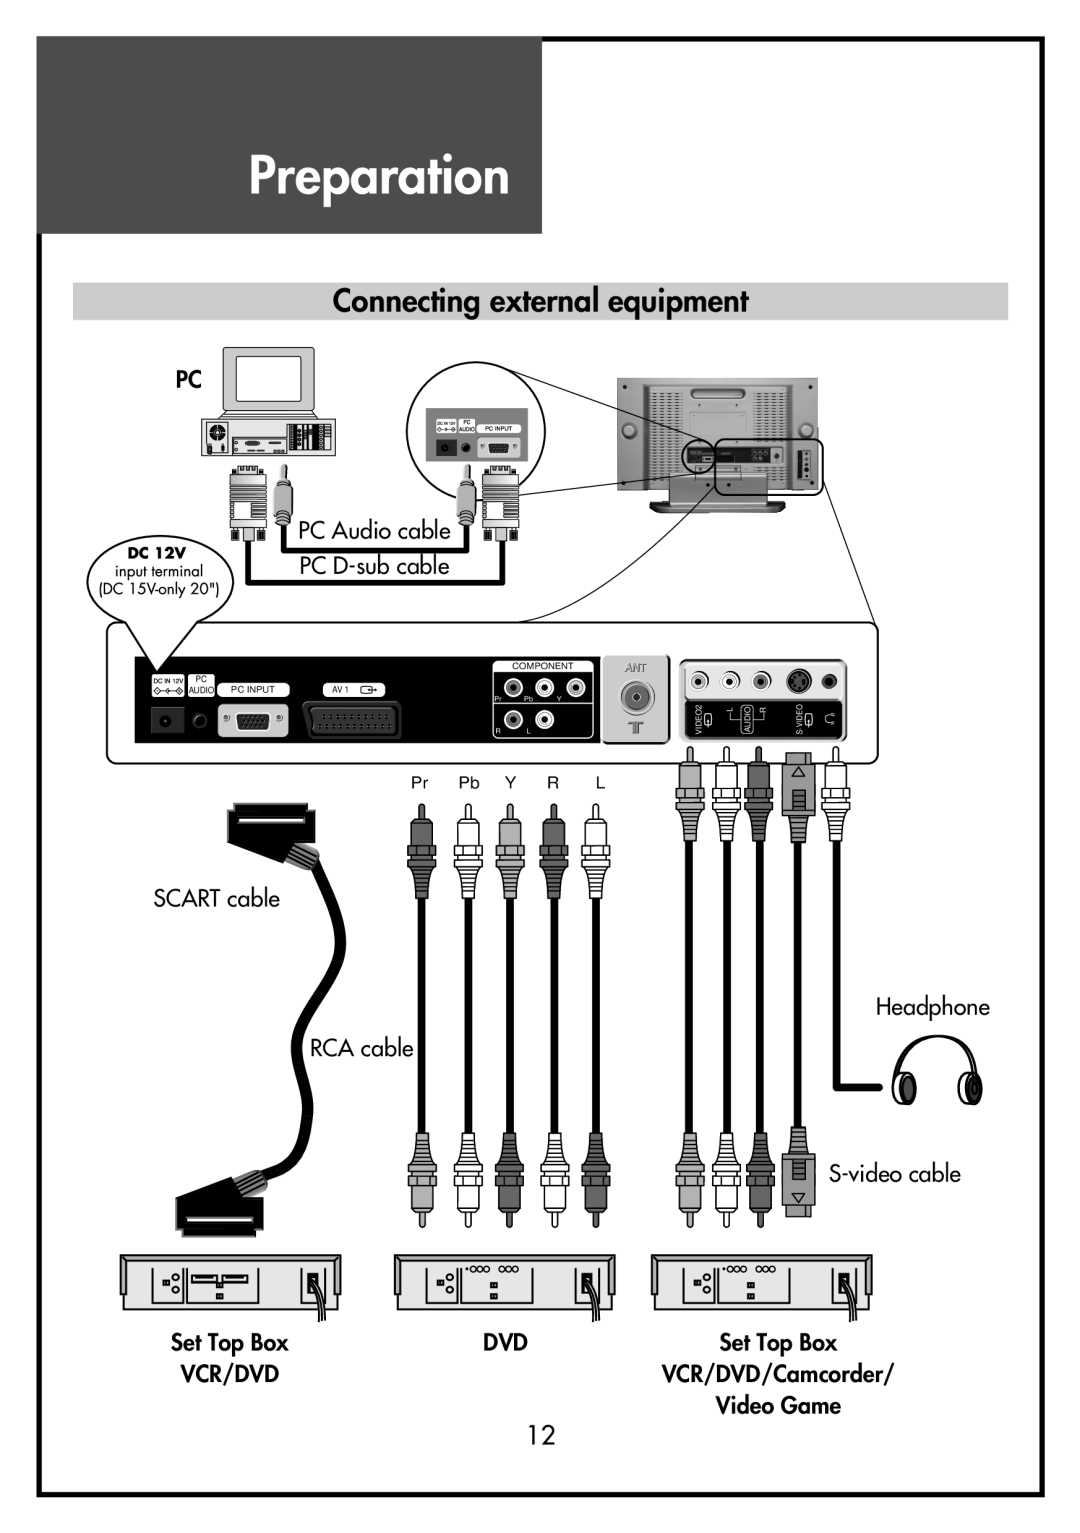 Daewoo DSL-17D3 Connecting external equipment, Preparation, Component, Audio Pc Input, S-Video, VIDEO2, L Audio R 